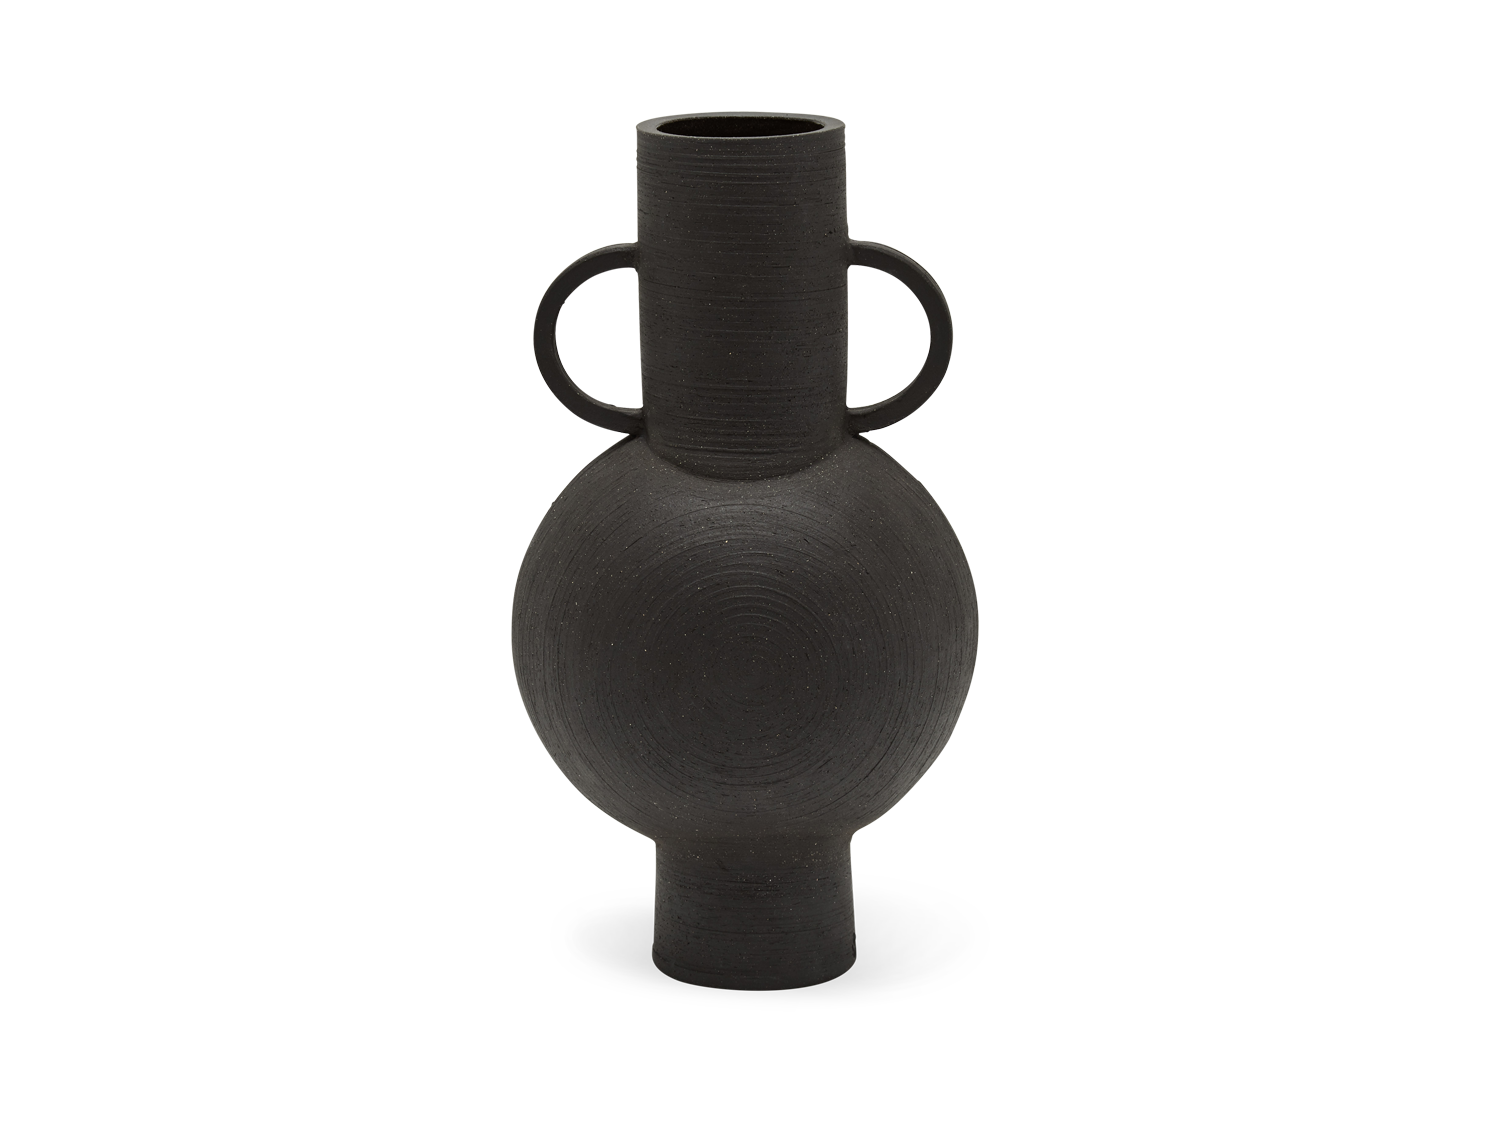 Amphora Vessel